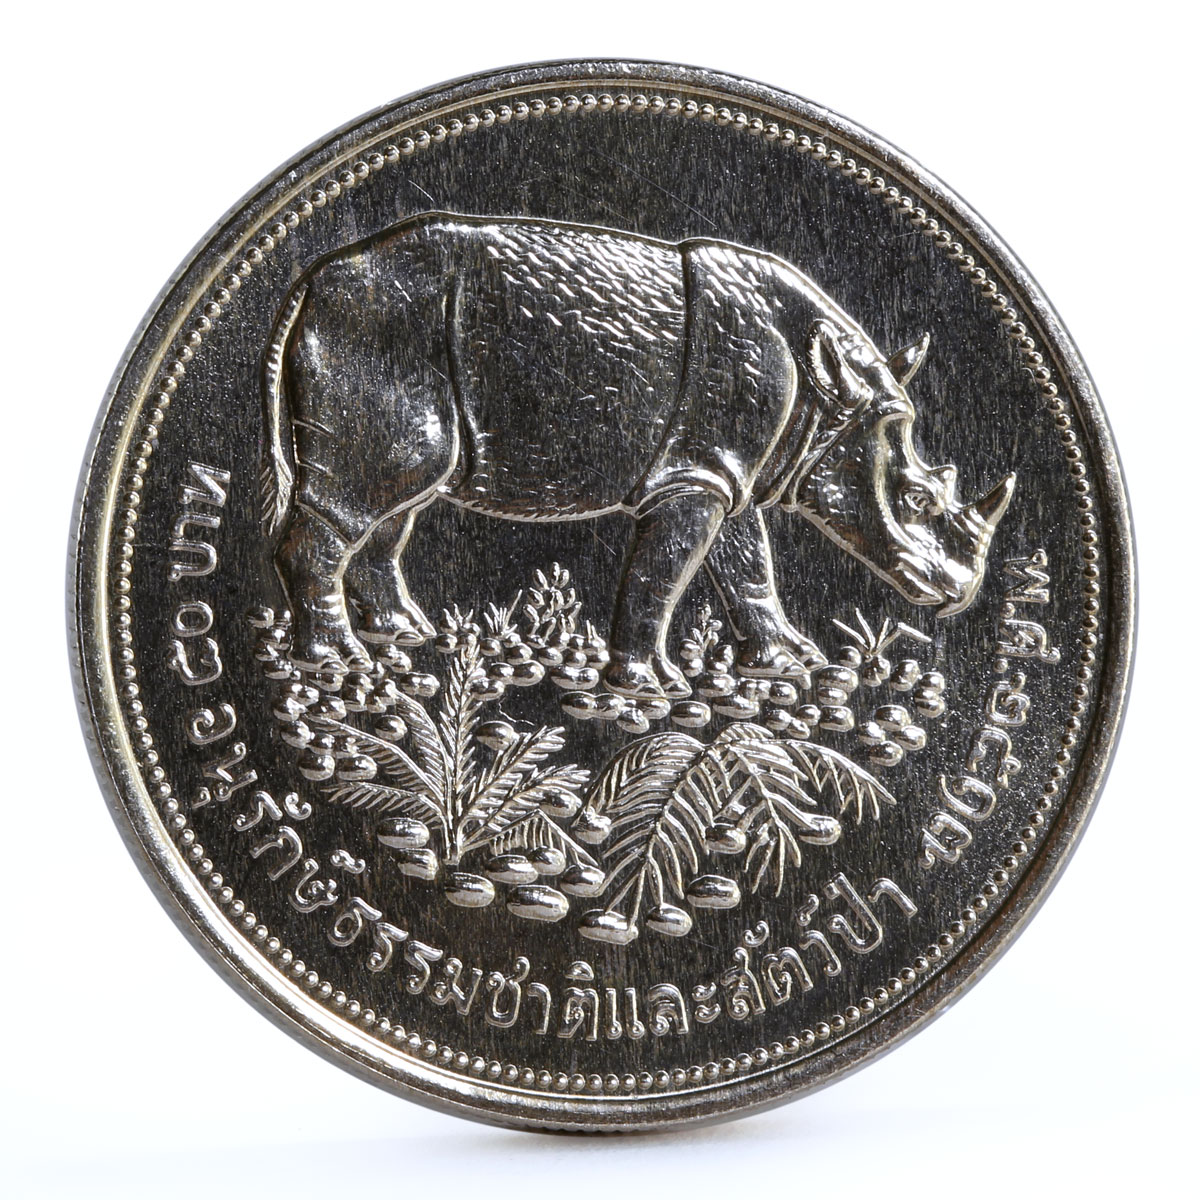 Thailand 50 baht Wildlife Conservation series Rhinoceros silver coin 1974